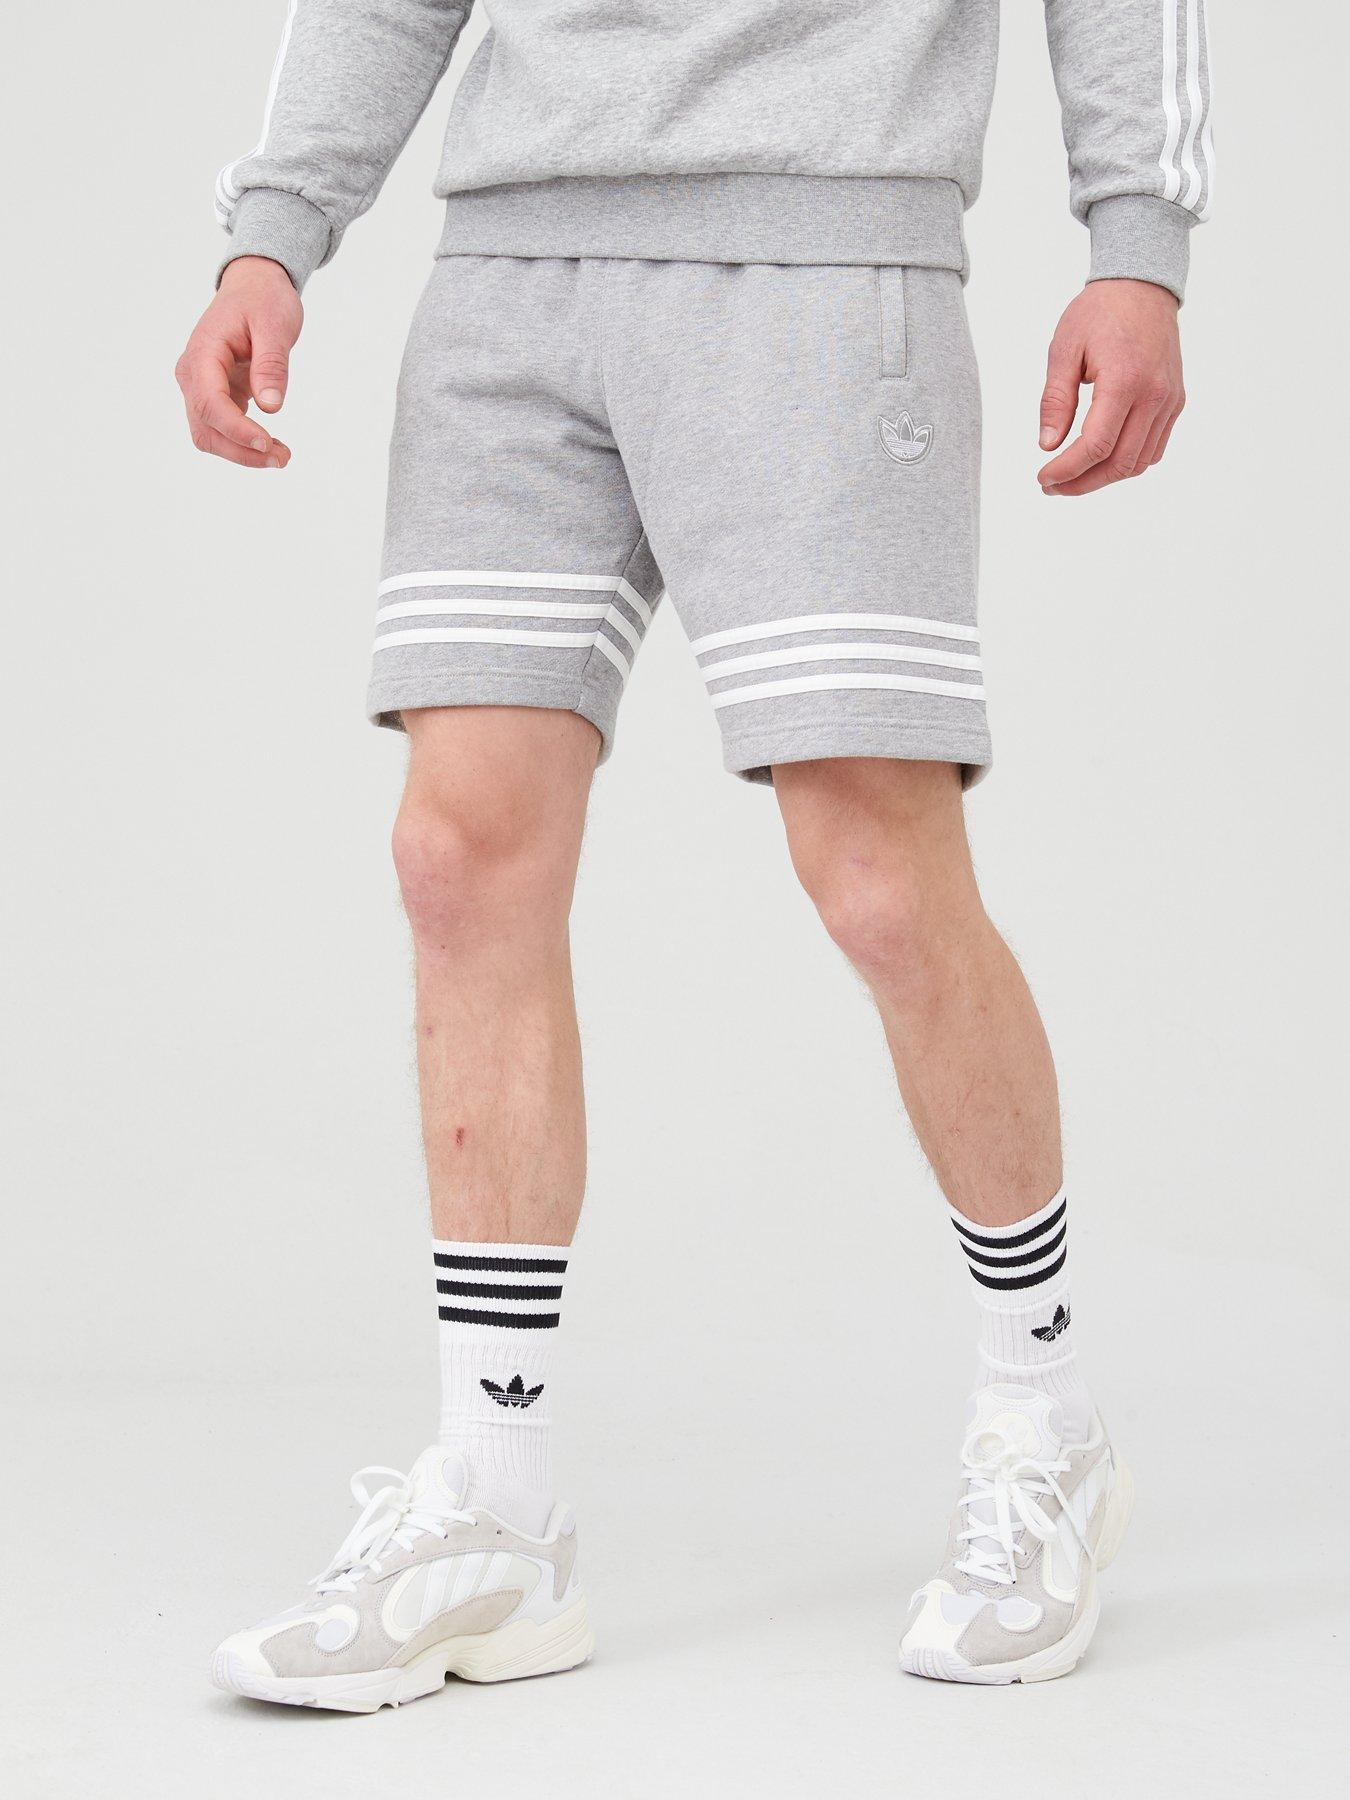 adidas outline shorts grey